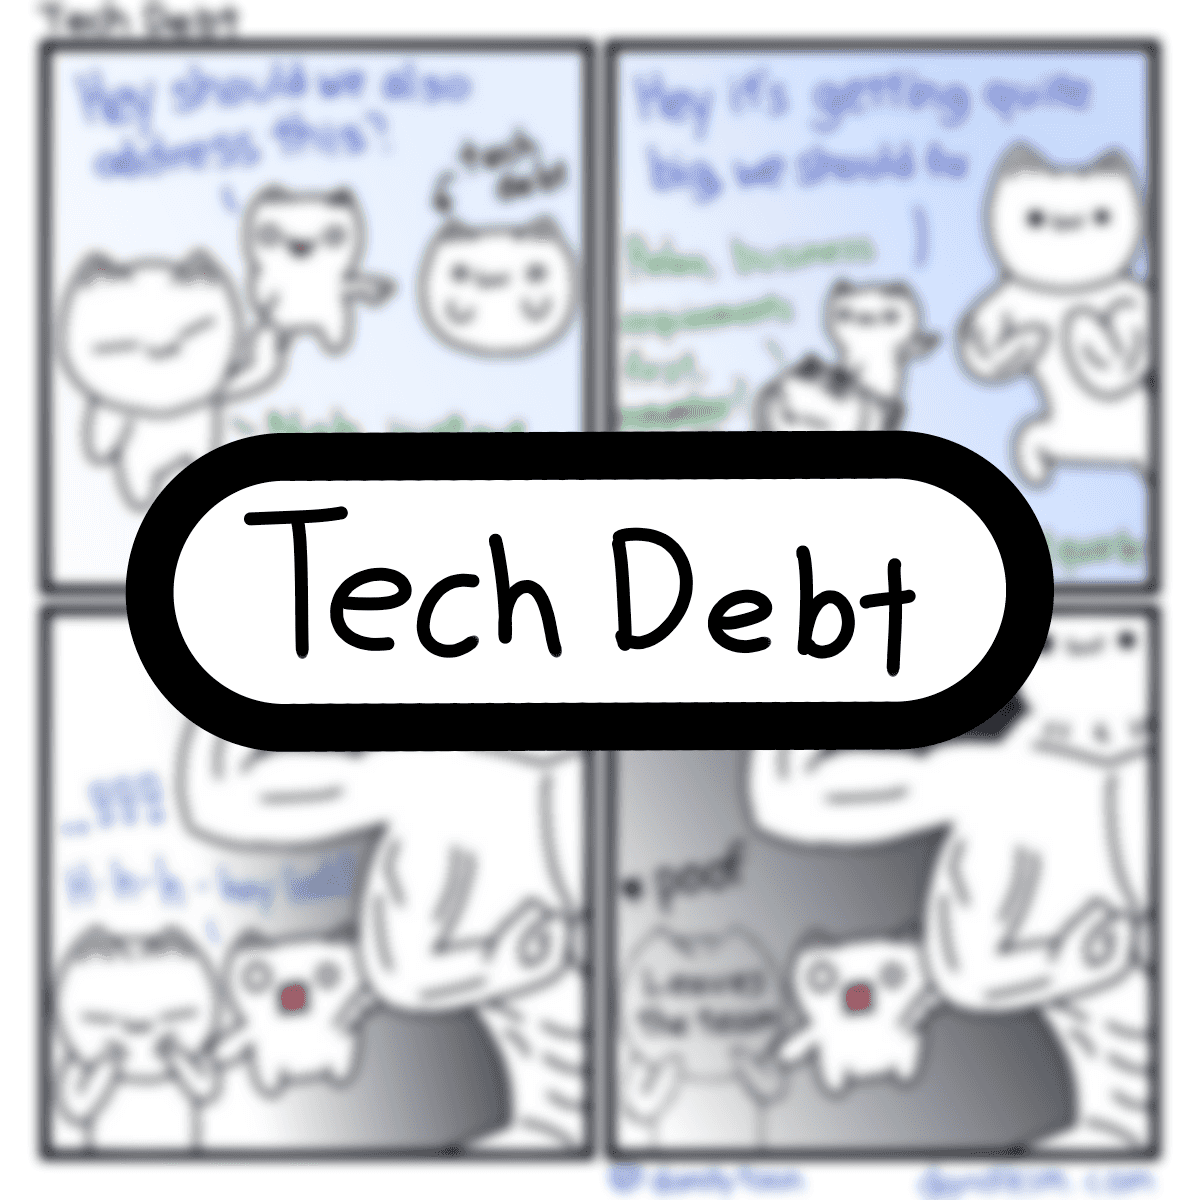 Image for /tech-debt/